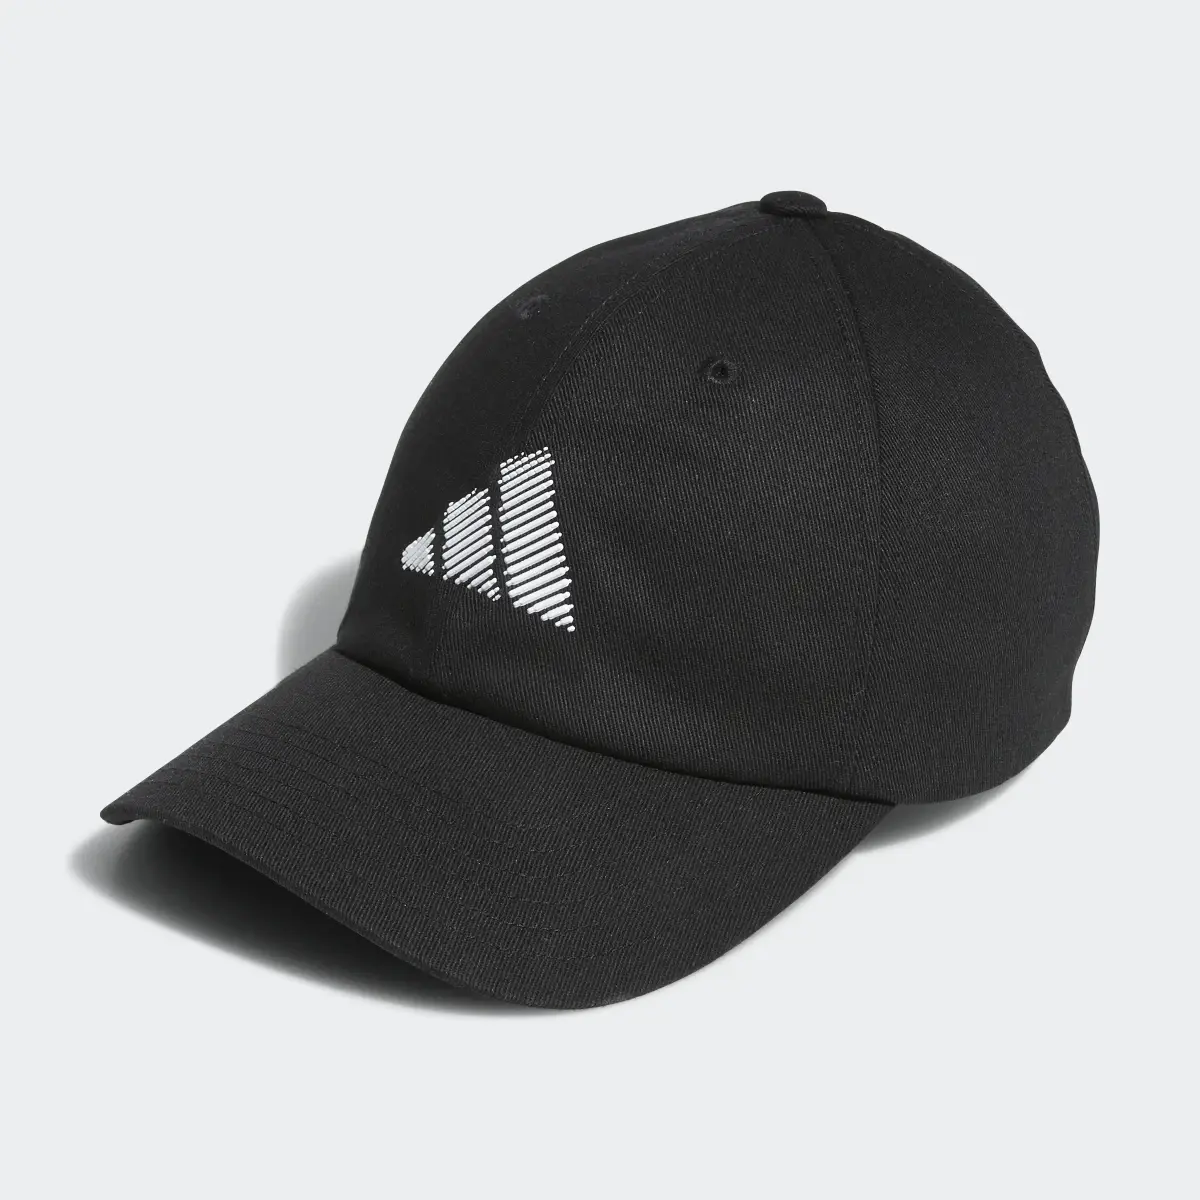 Adidas Criscross Golf Hat. 2